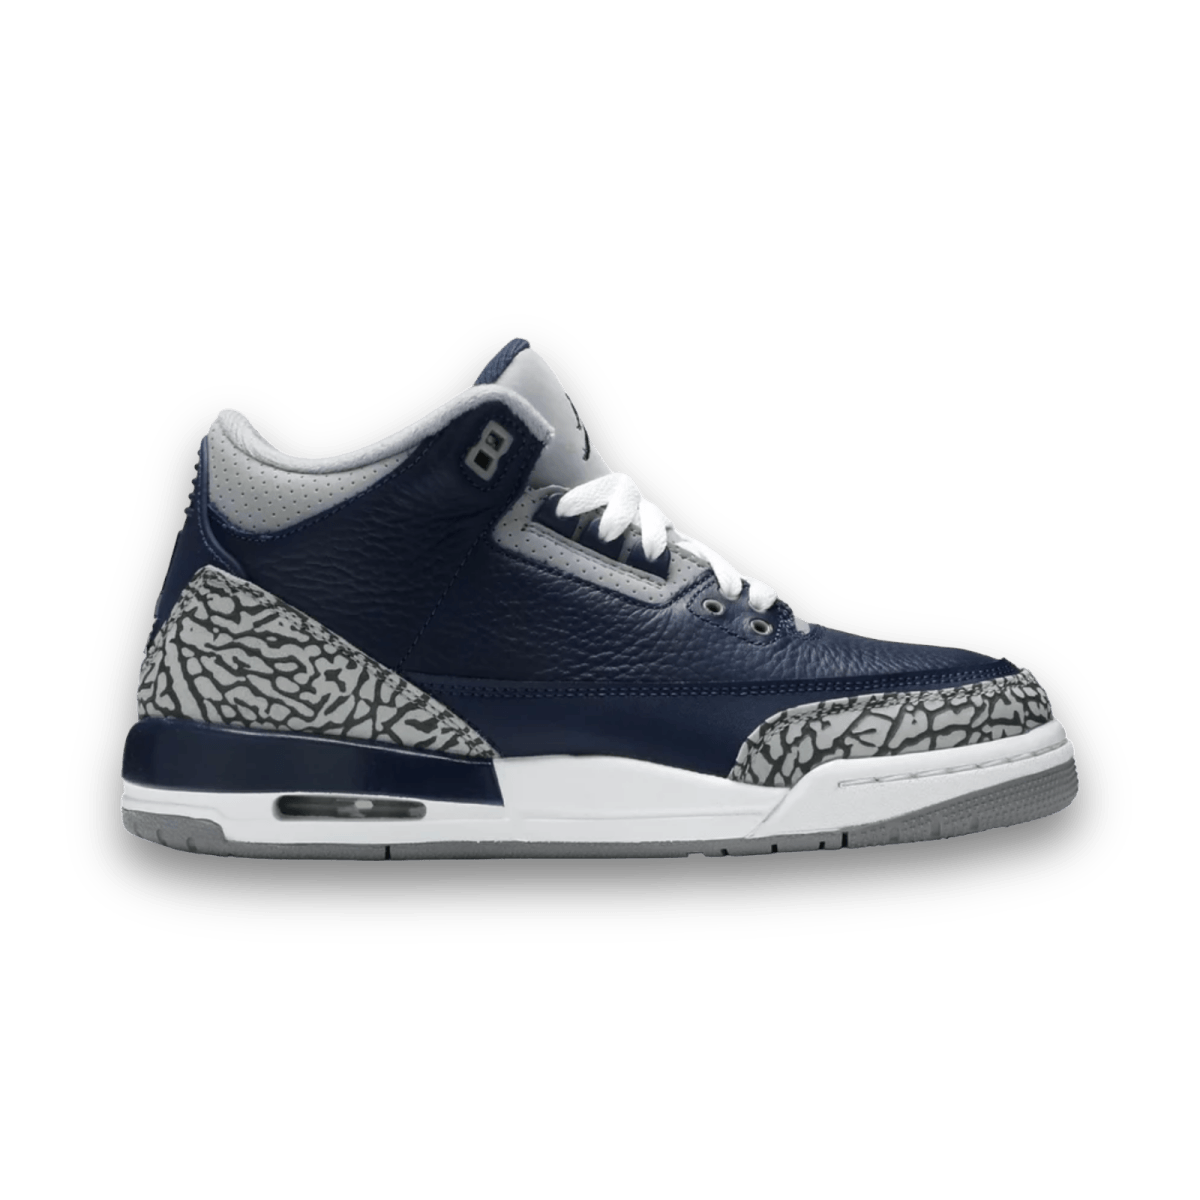 Air Jordan 3 Retro Navy & Silver - Mid Sneaker - Jordan - Jawns on Fire - sneakers